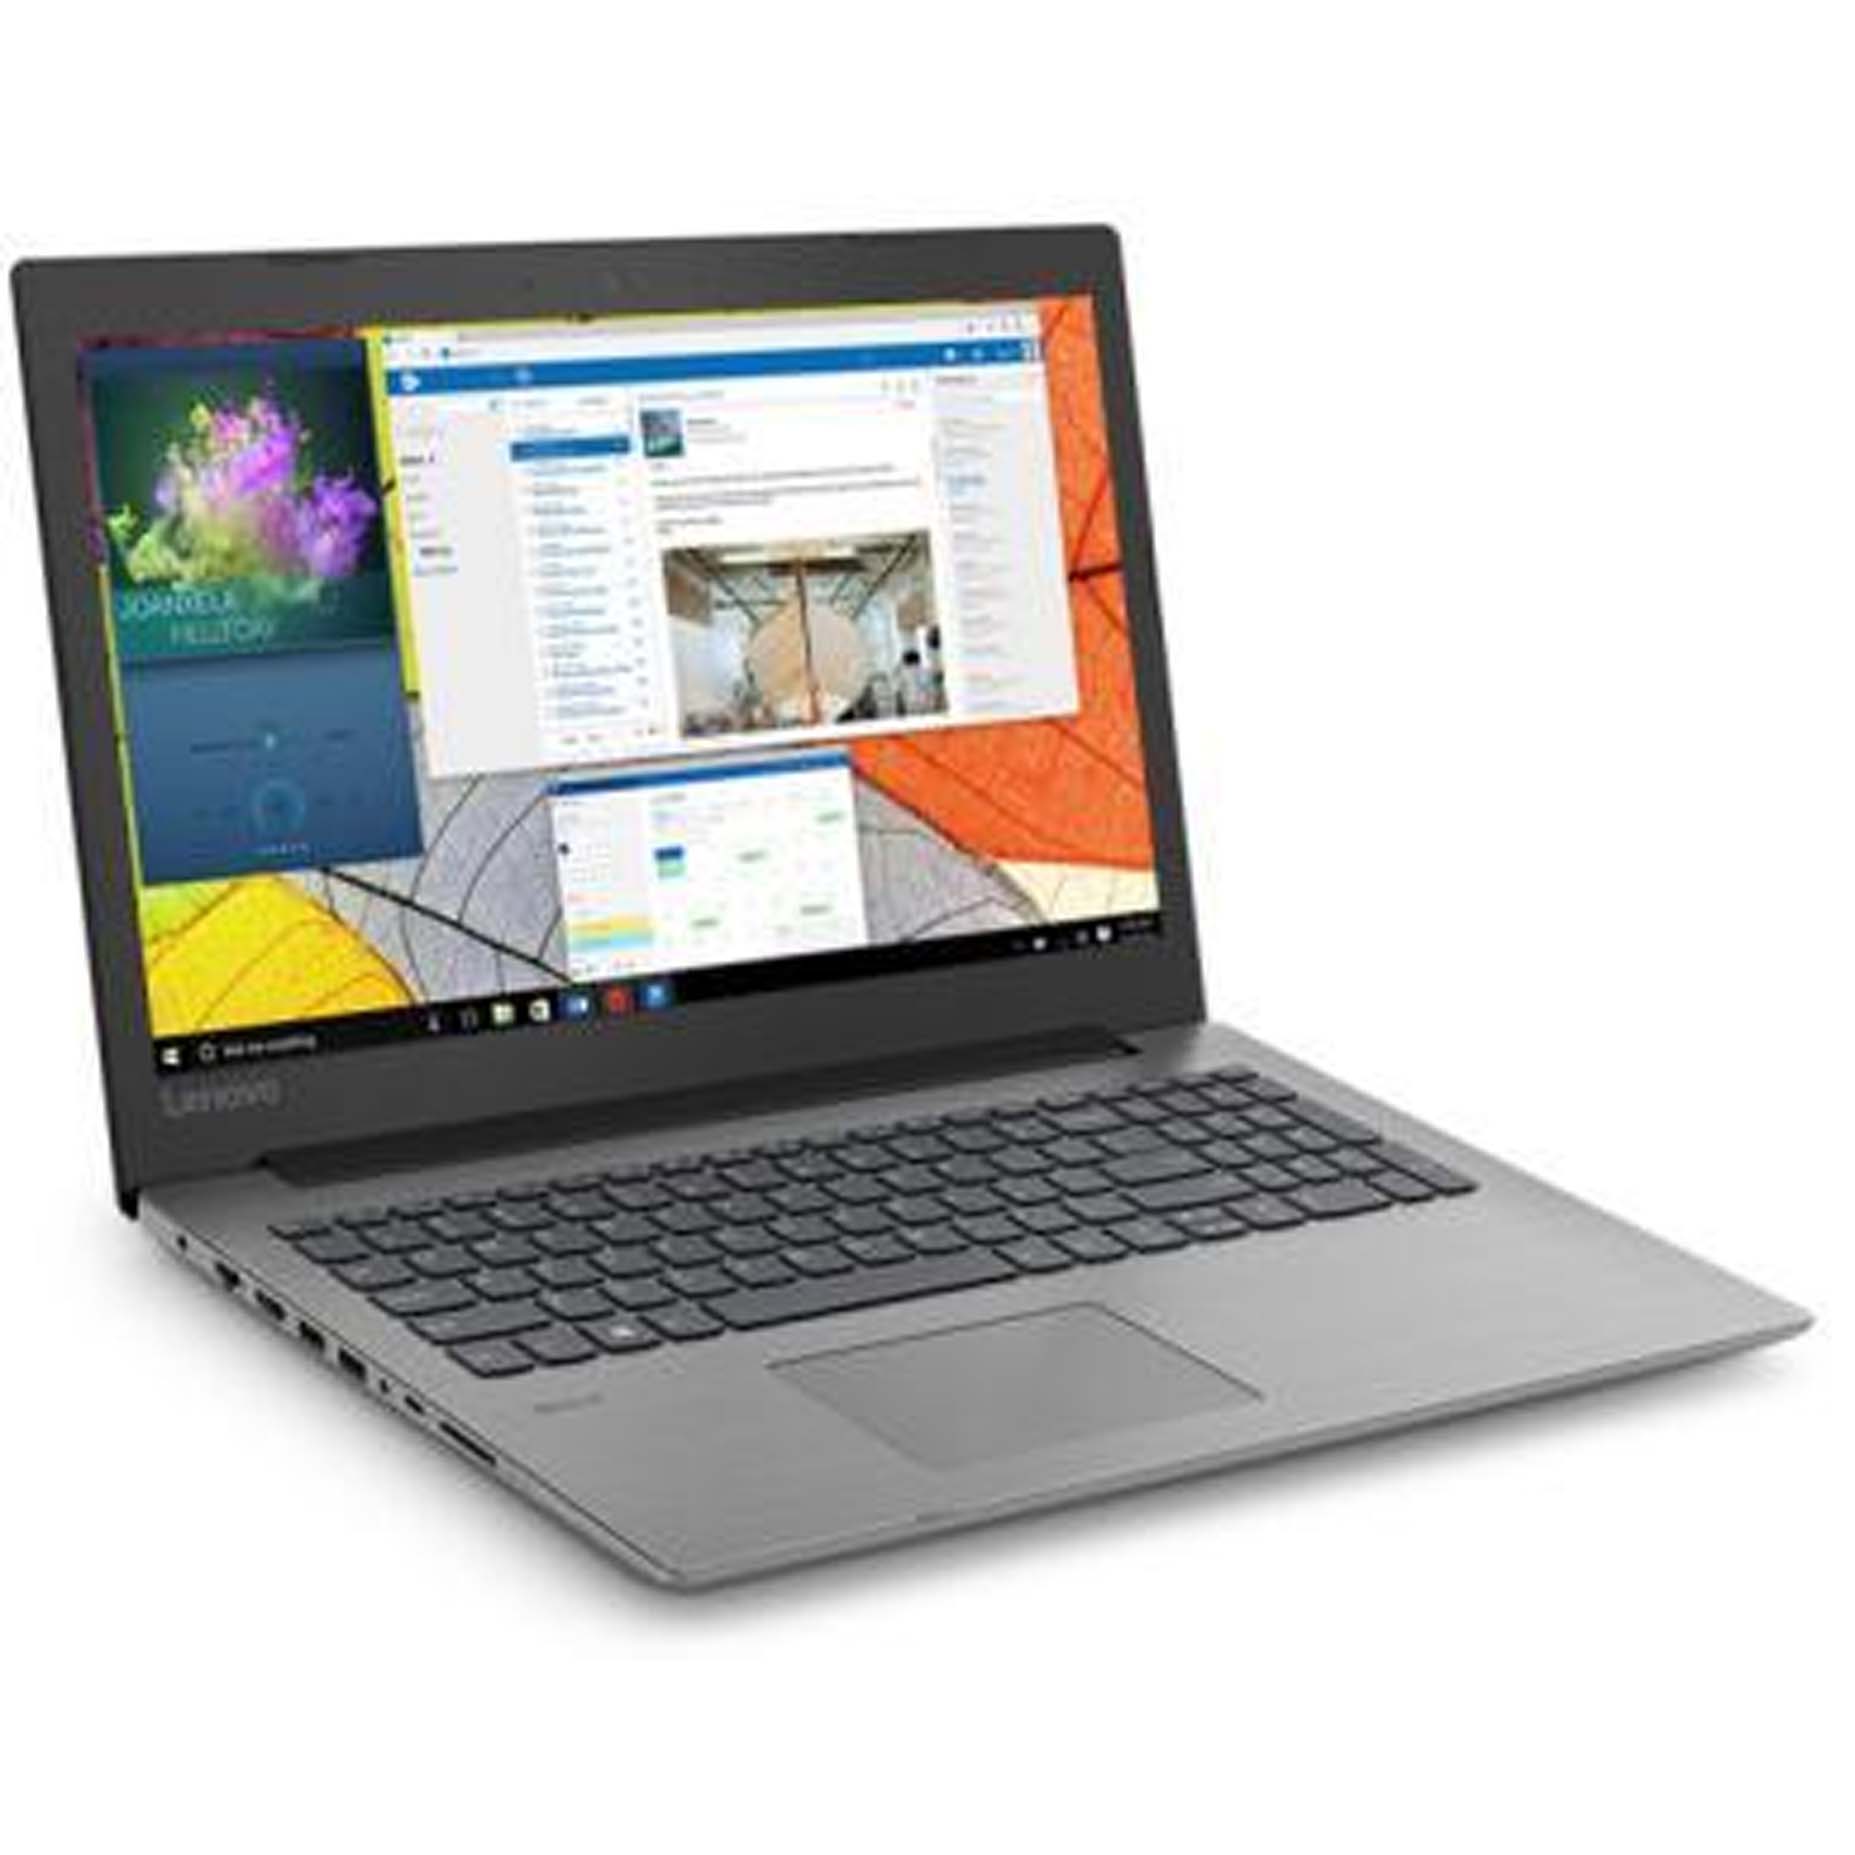 Harga Lenovo Ideapad IP330-15ICH HLID Laptop Intel Core i7-8750H 8GB 1TB Nvidia GTX1050 4GB Windows 10 15.6 Inch Grey